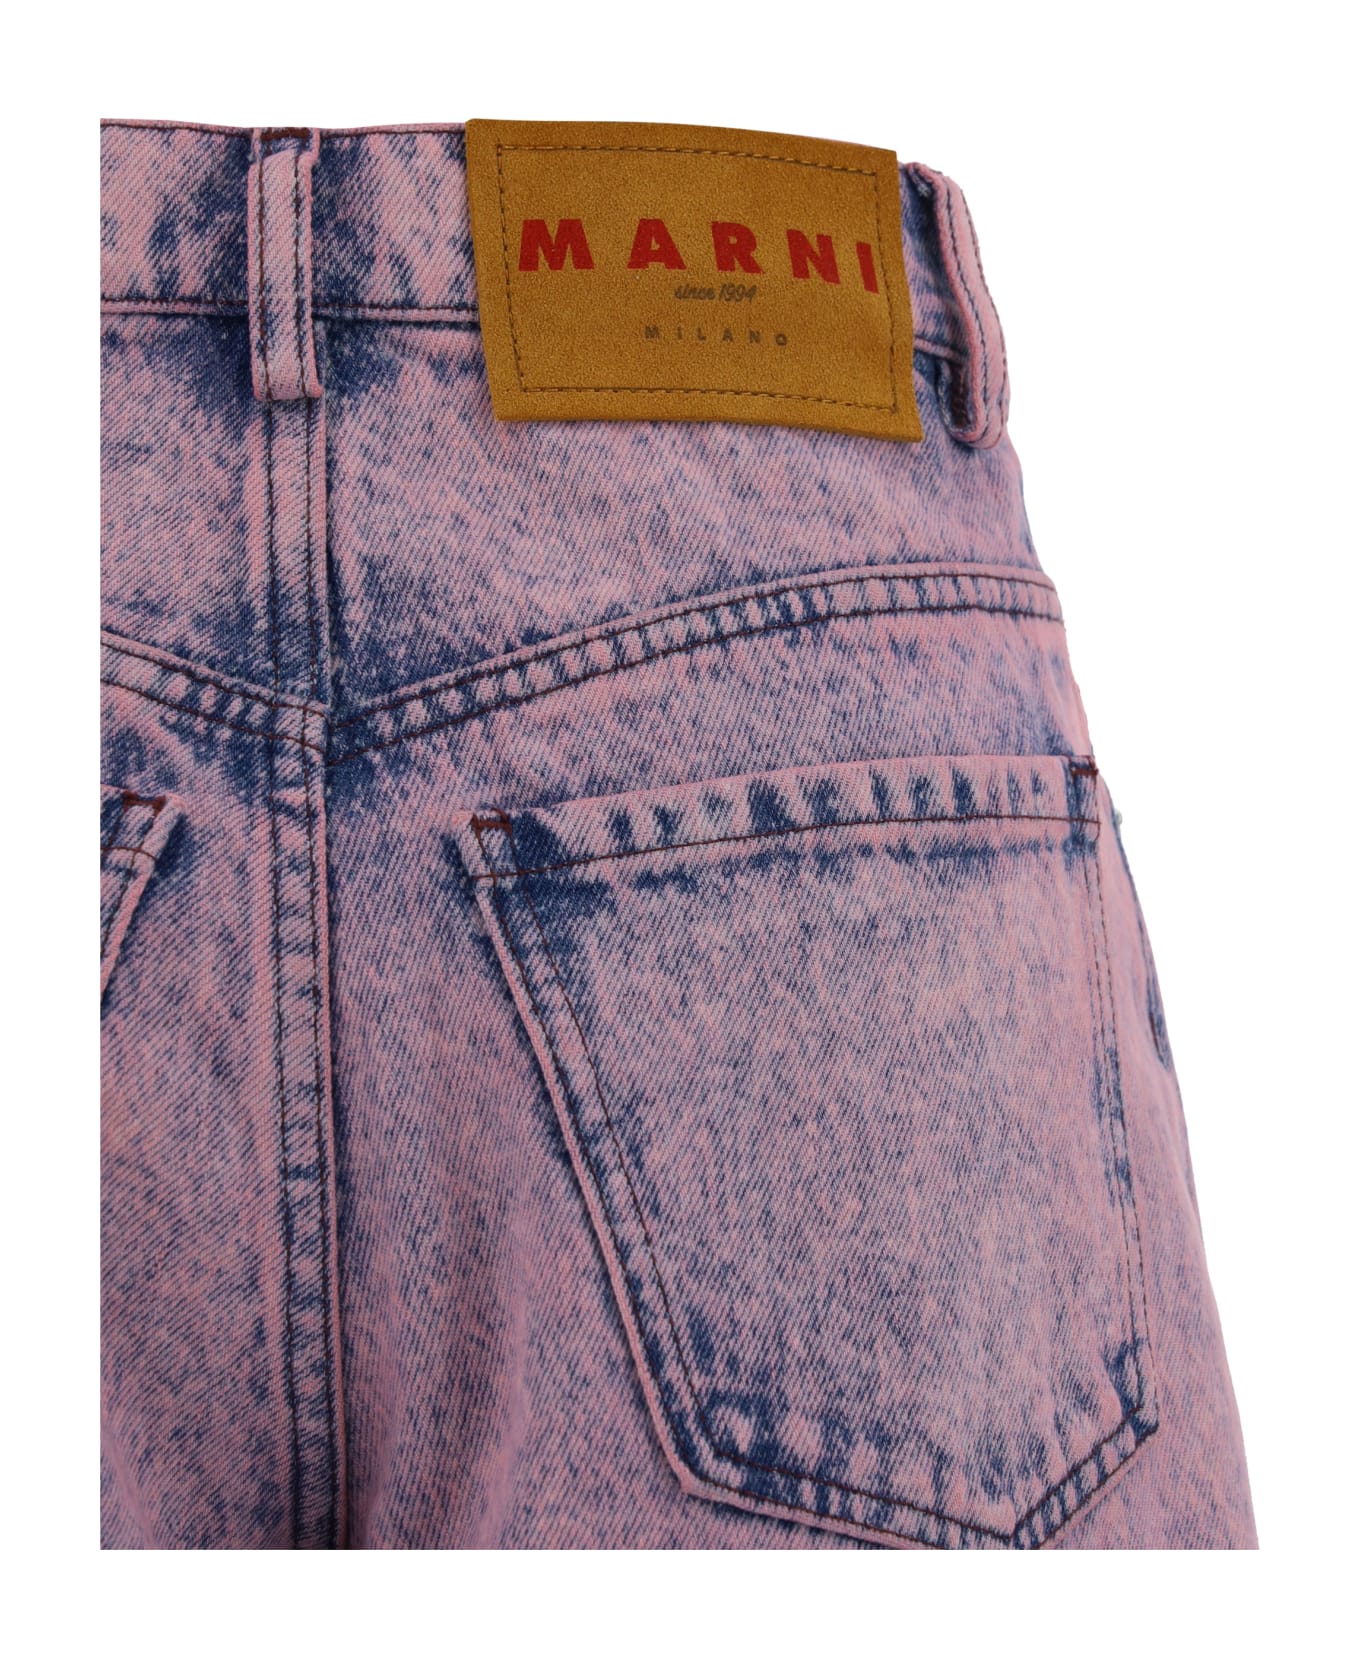 Marni Jeans - PINK